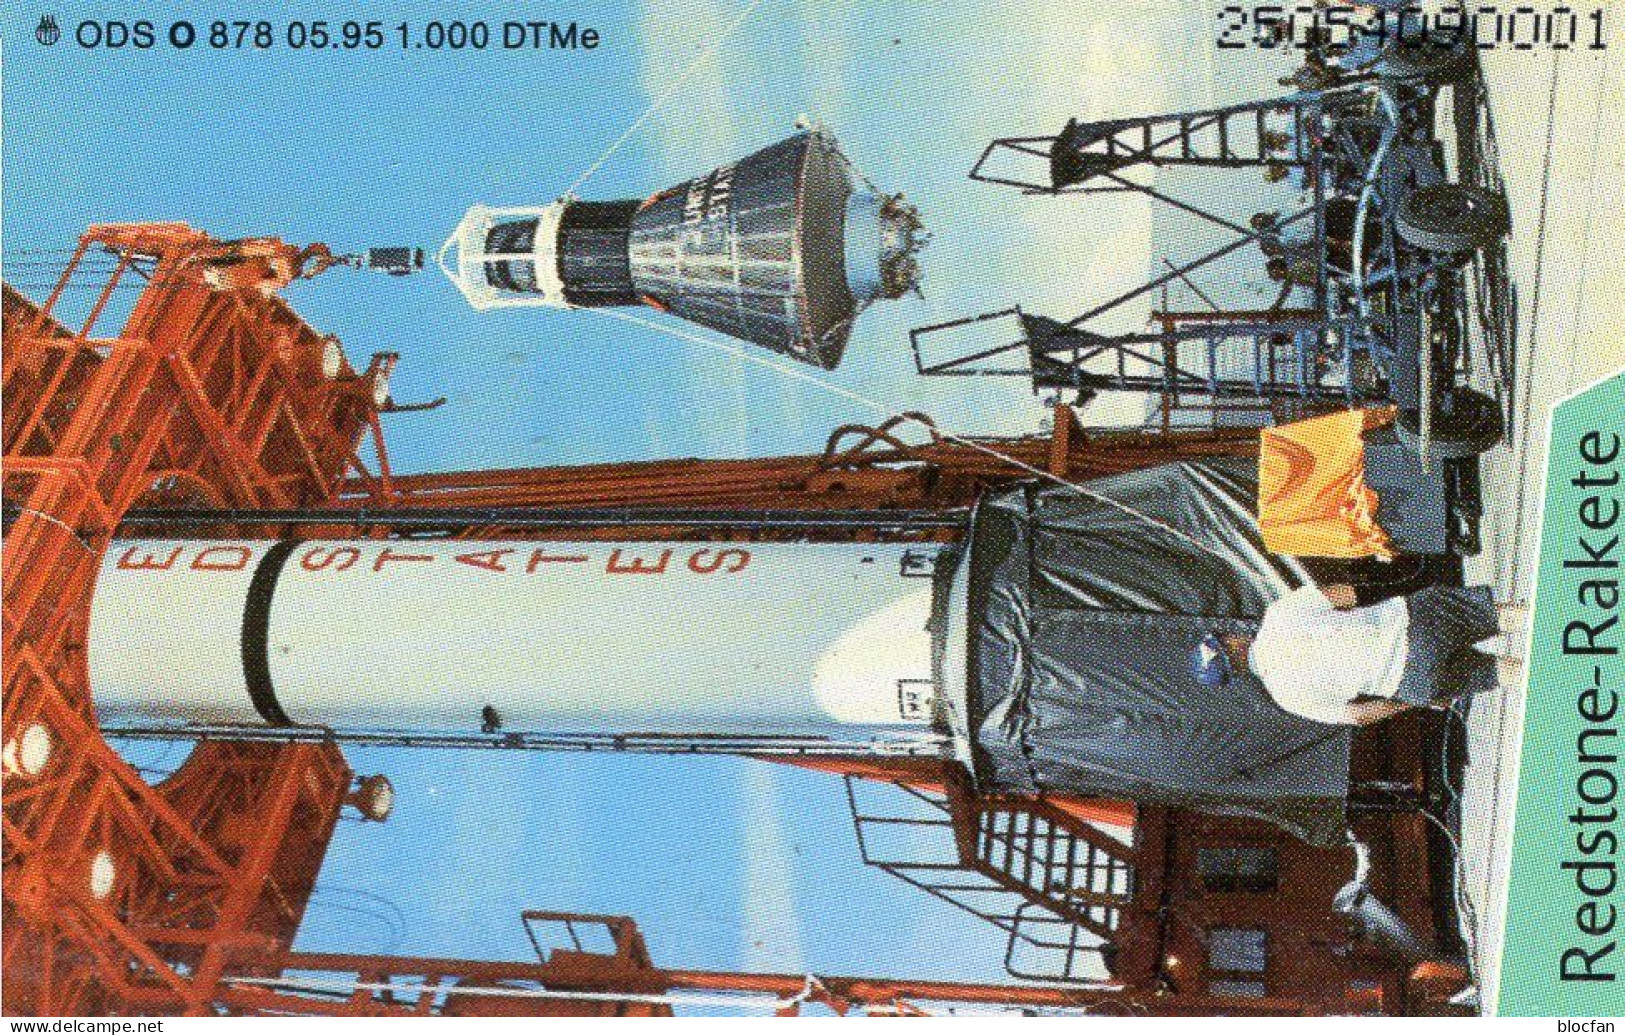 NASA Raumfahrt TK O 878/1995 ** 30€ 1.000 Expl. Weltraum-Konstruktion USA Redstone-Rakete TC Space Phonecard Of Germany - Spazio